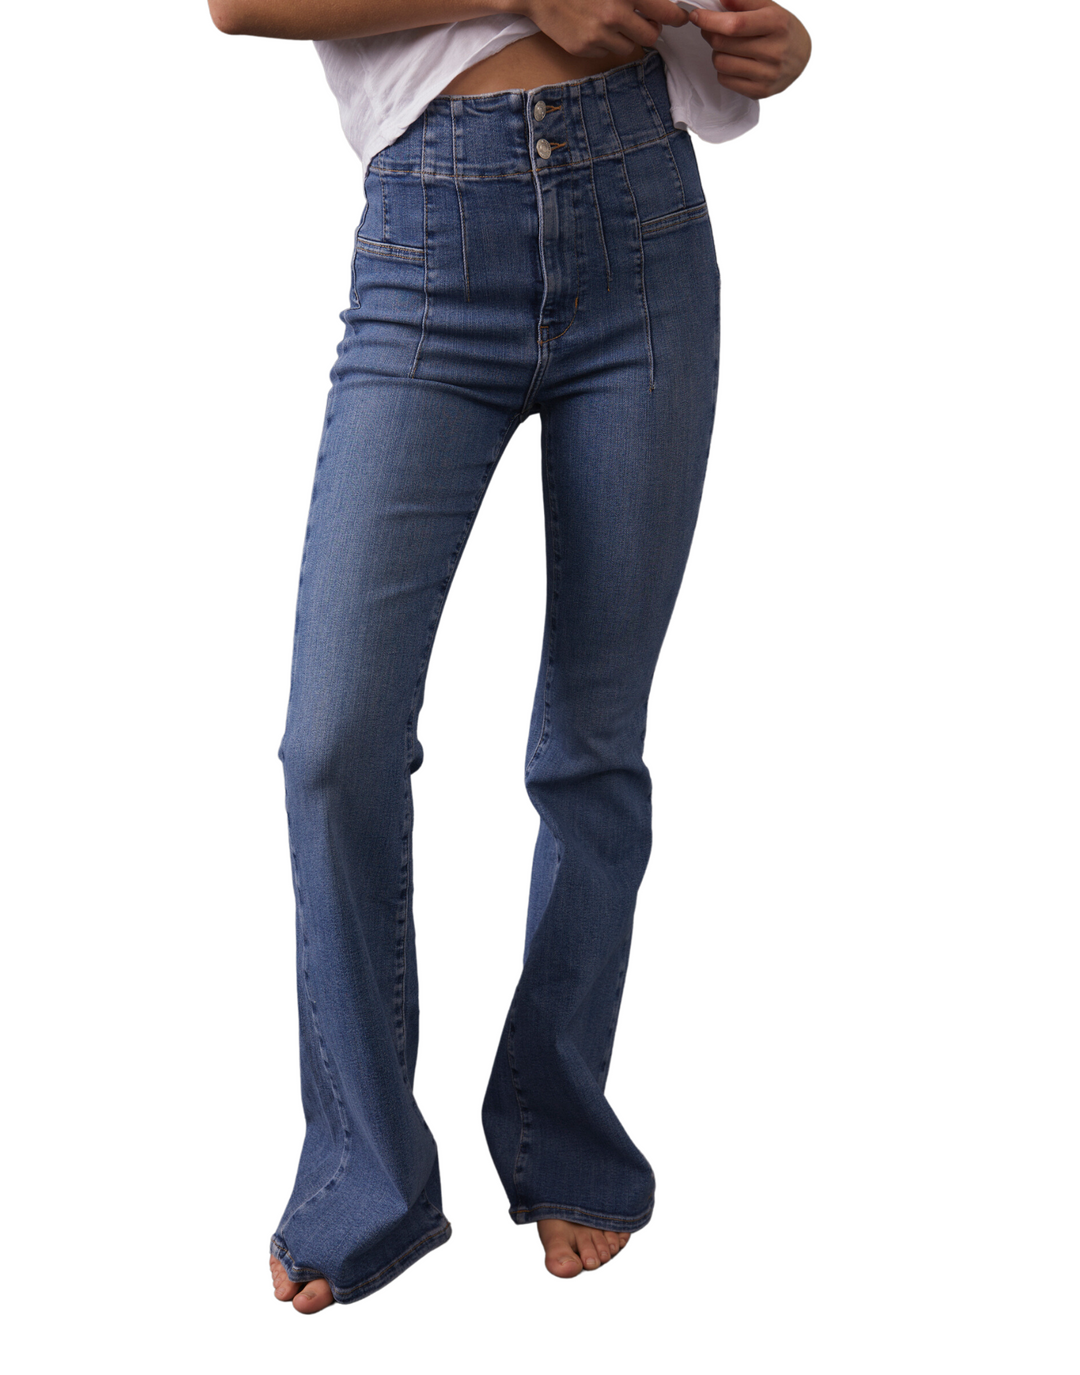 Jayde Flare Jeans in Sunburst Blue - Madison's Niche 